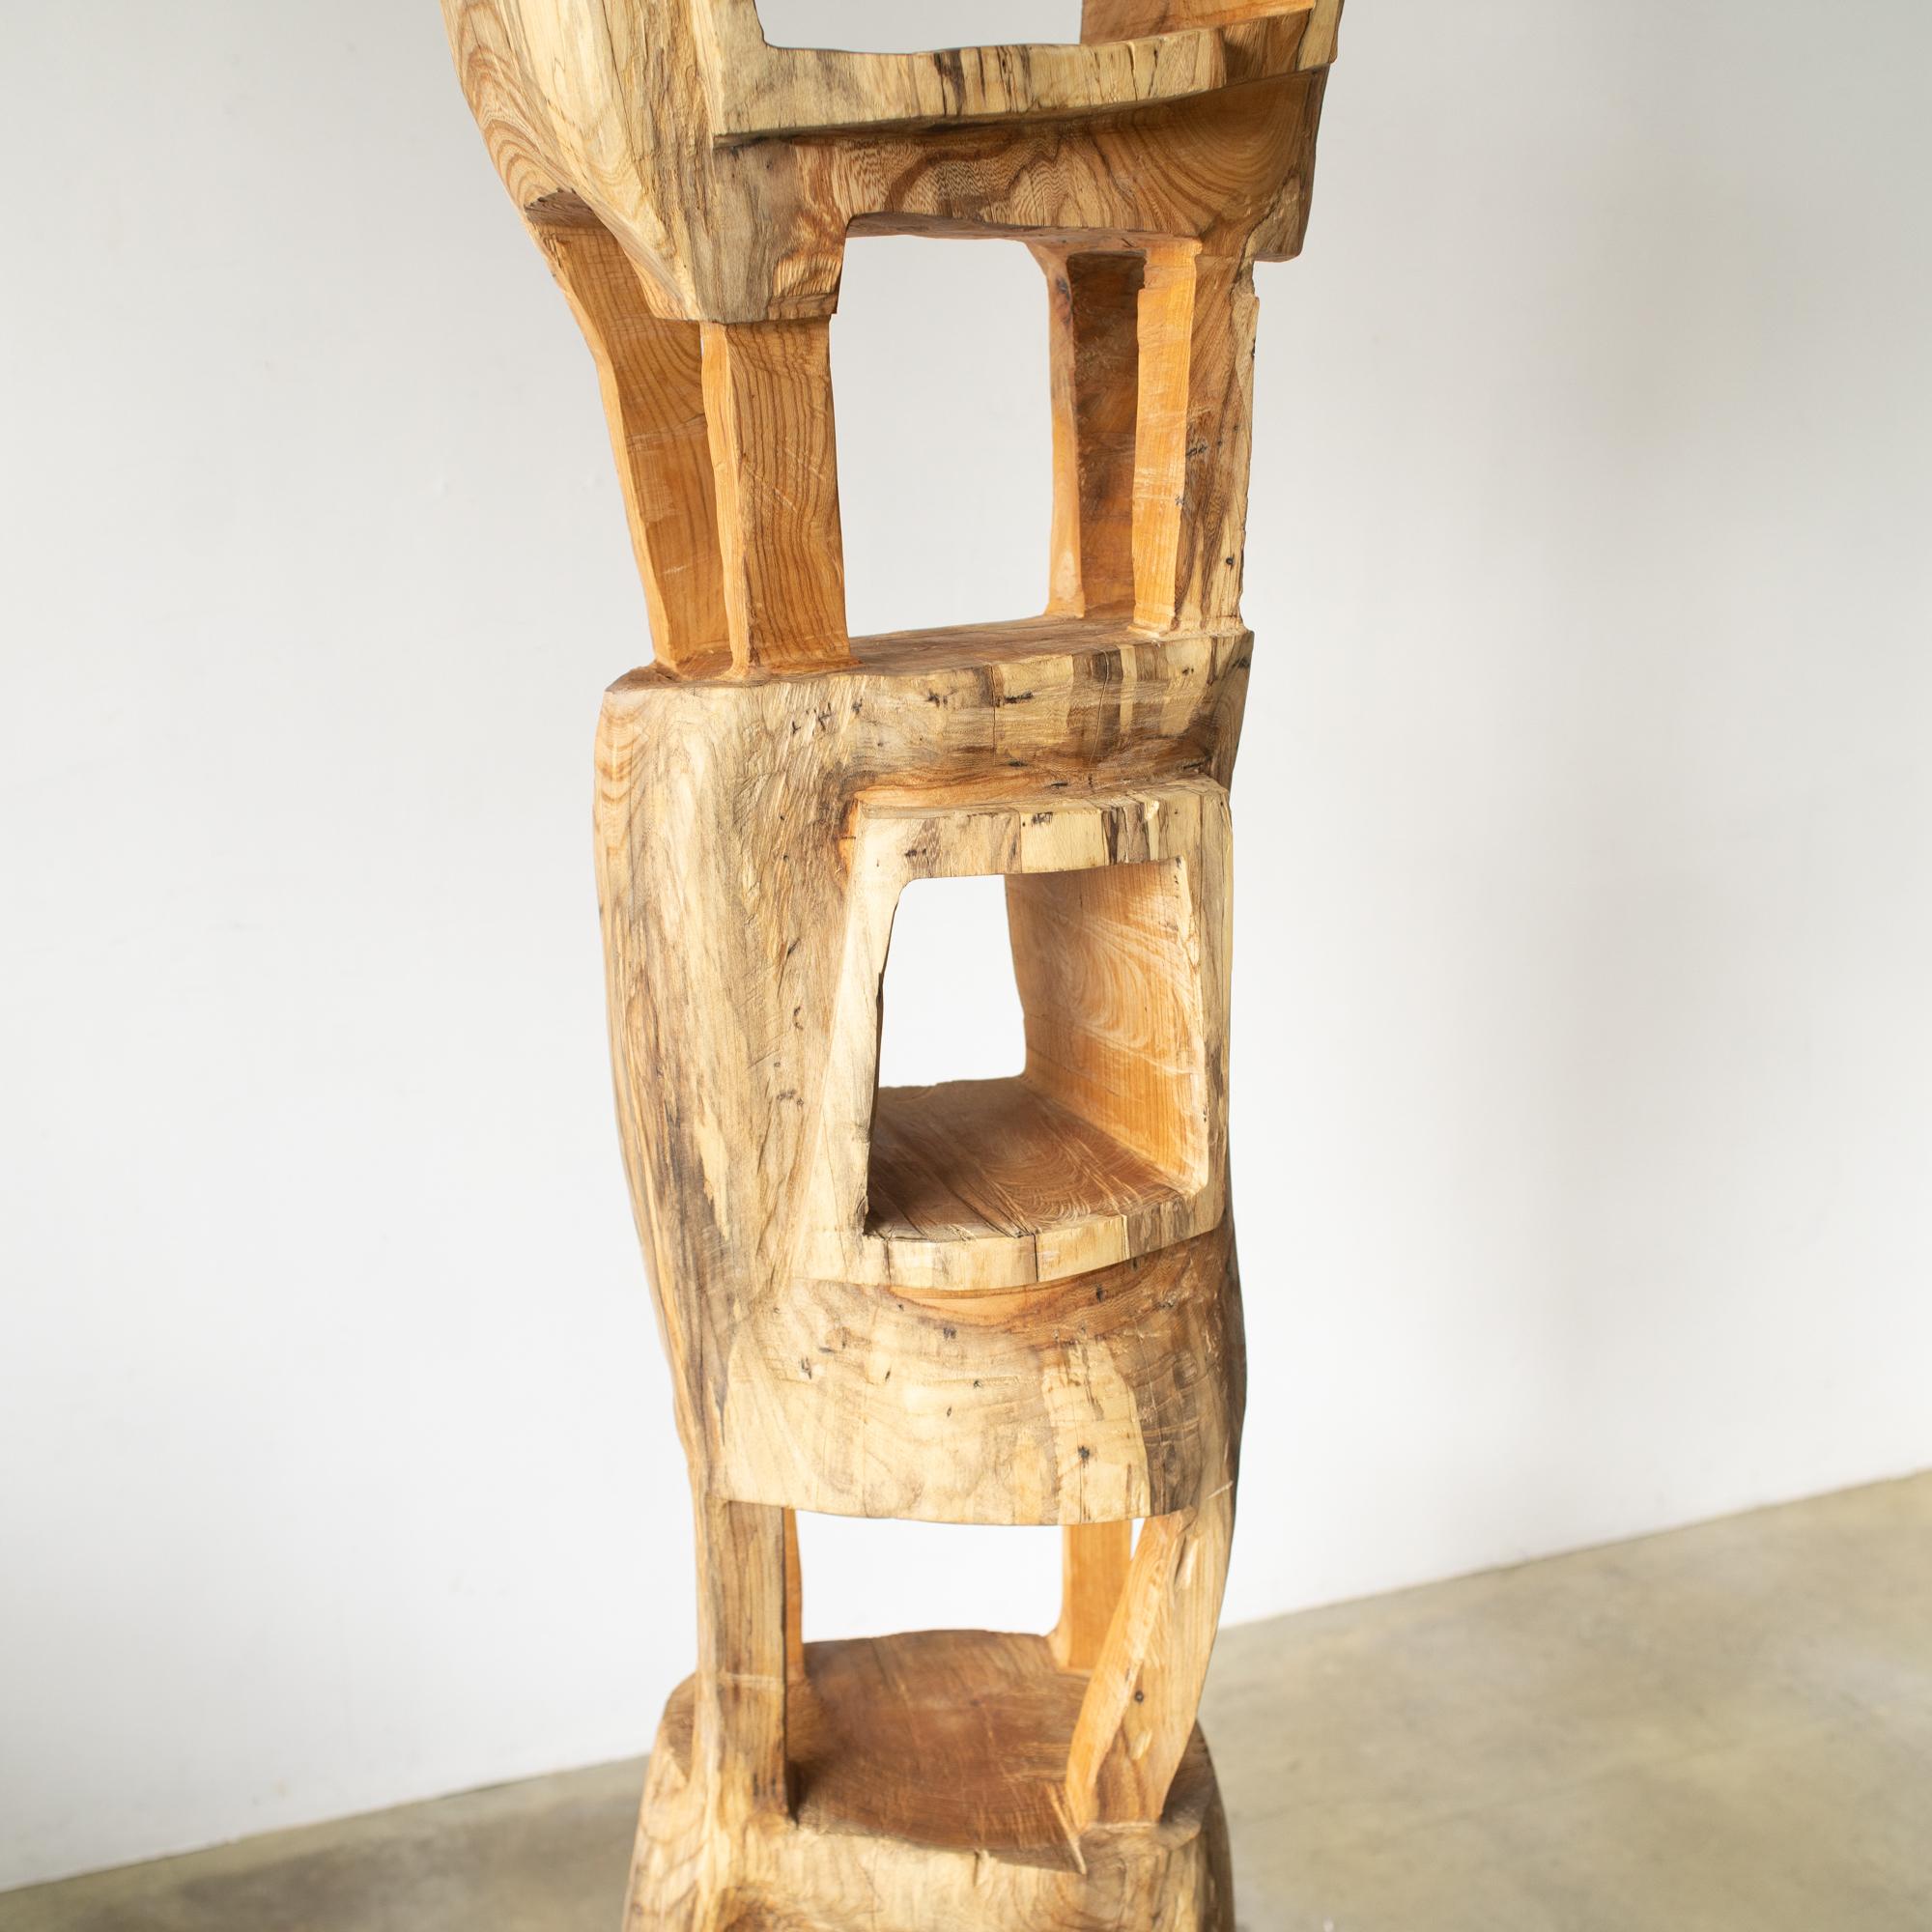 Wood Hiroyuki Nishimura Sculpture3 Abstract Style Wild Nature Glamping